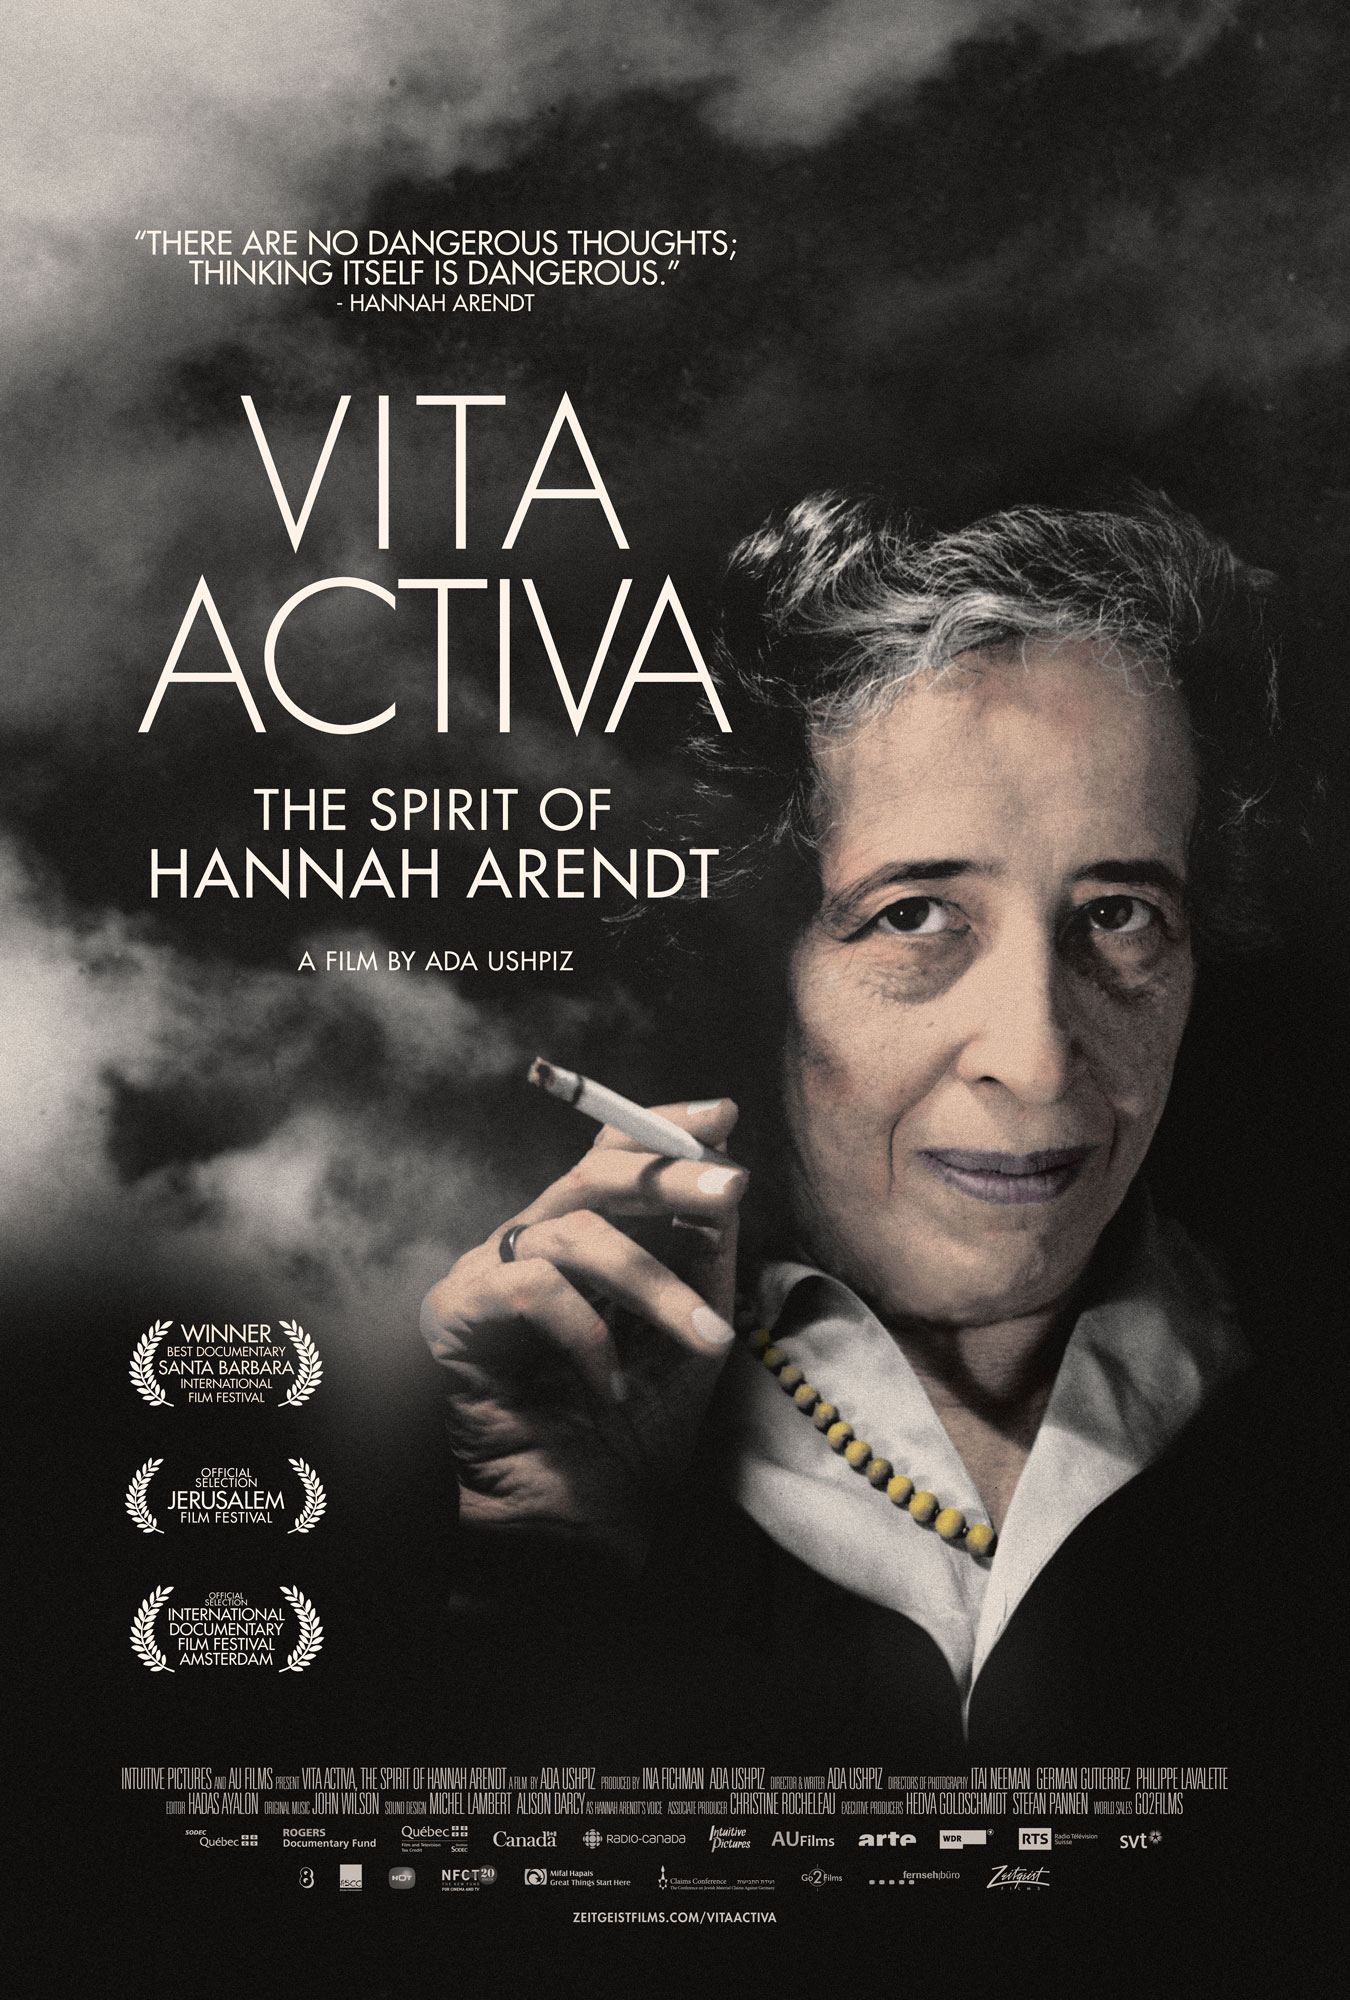 Vita Activa - The Spirit of Hannah Arendt [DVD]